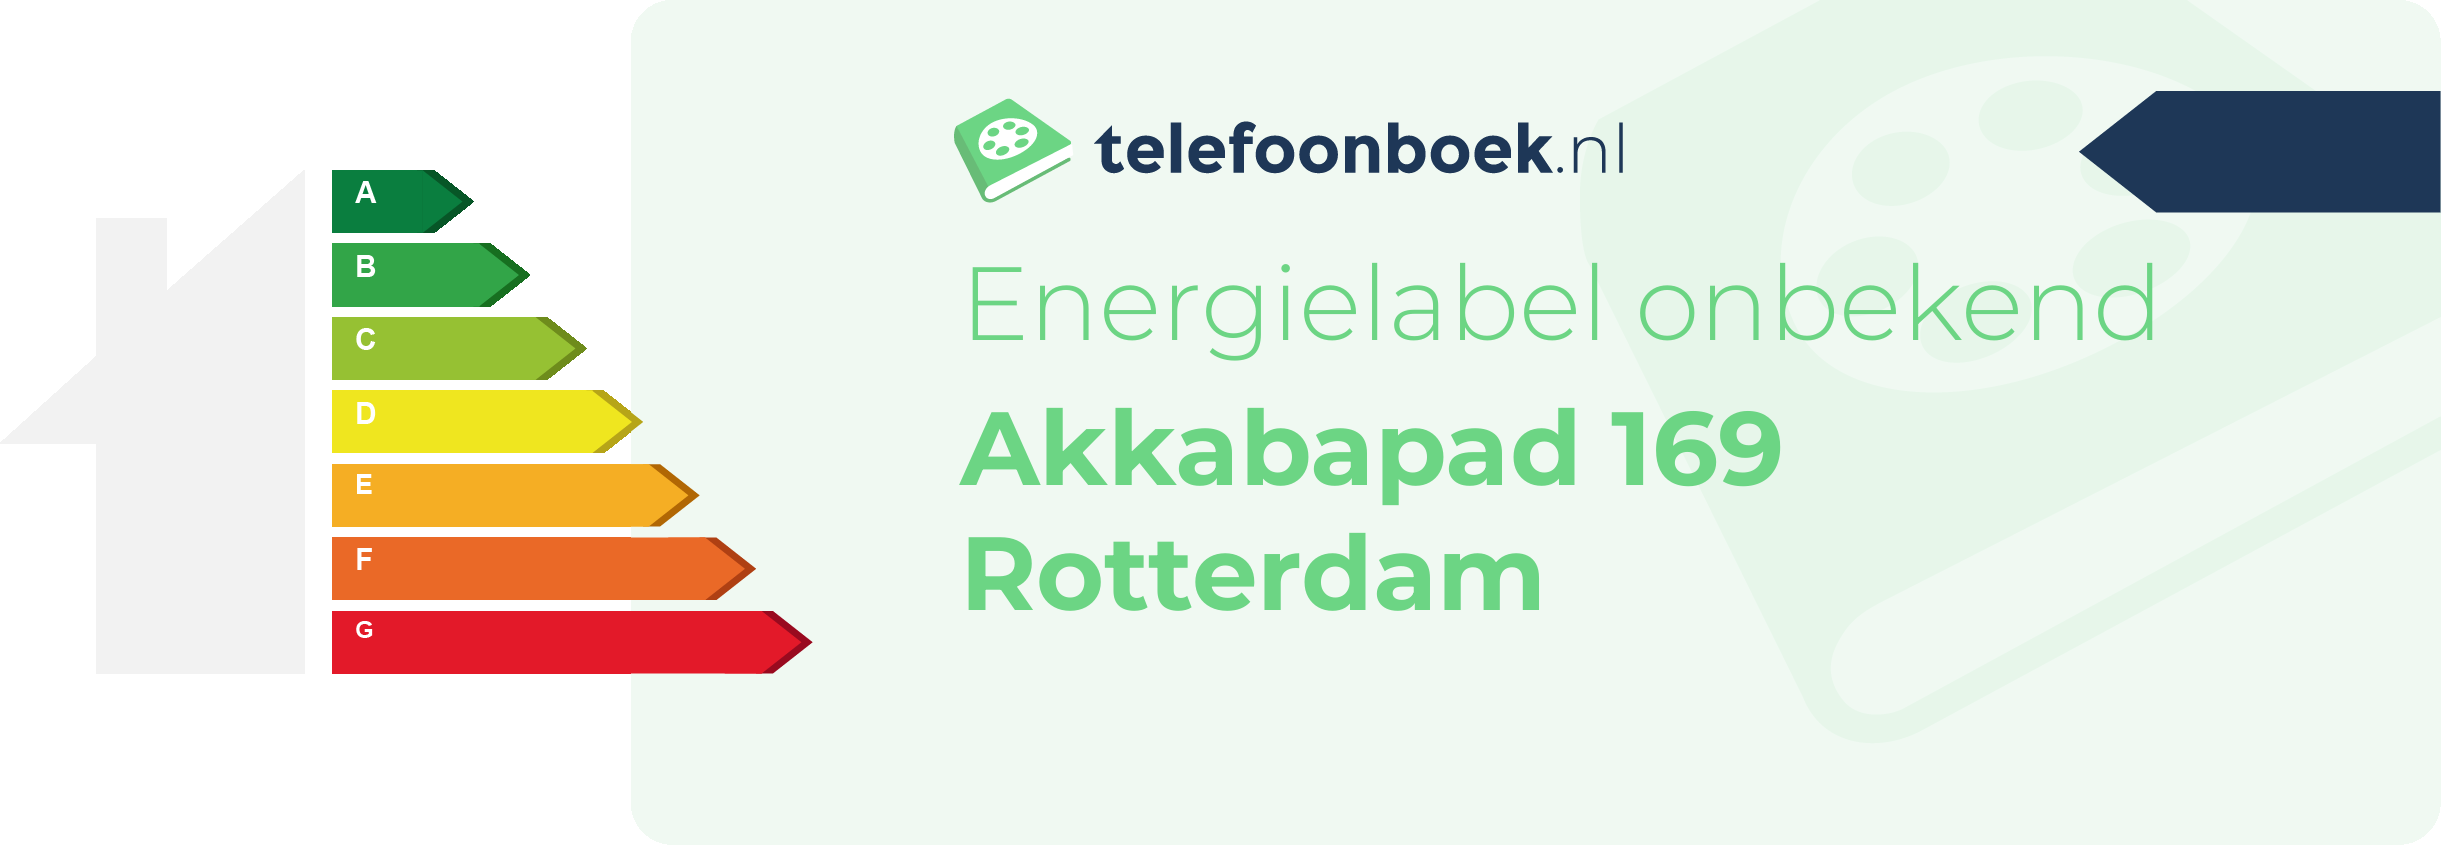 Energielabel Akkabapad 169 Rotterdam